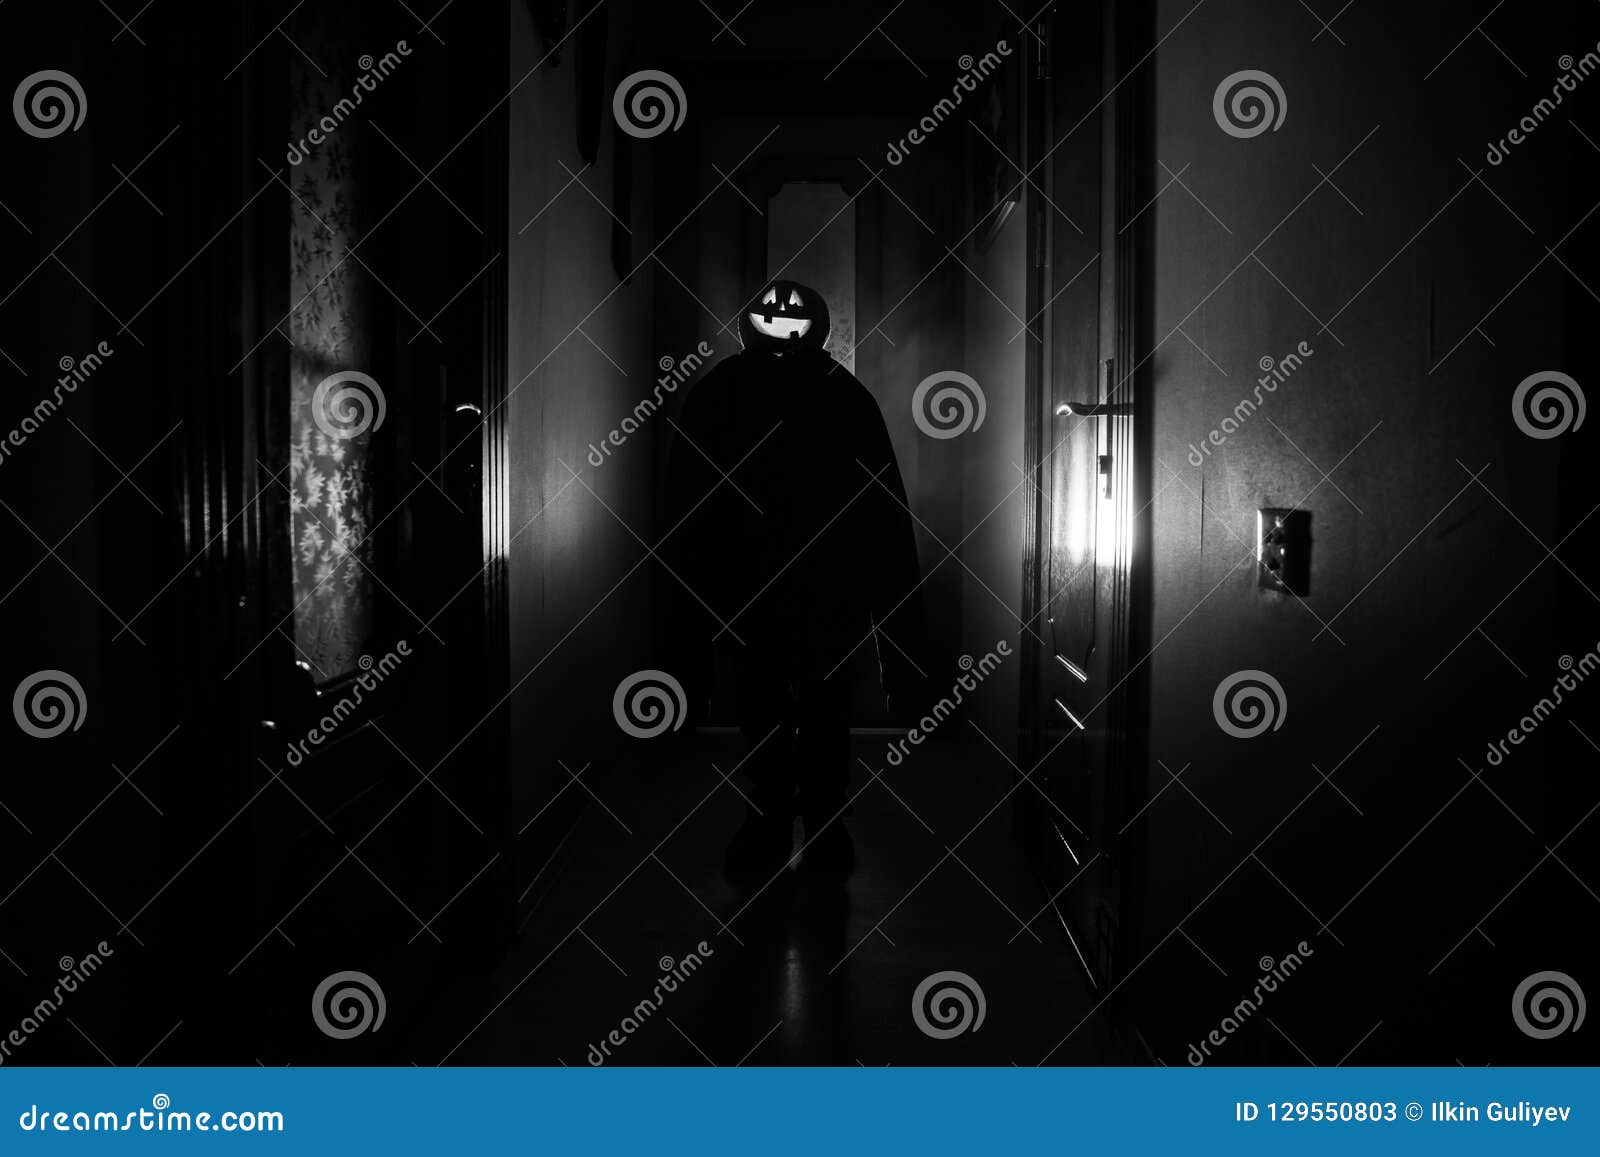 Halloween Concept Creepy Silhouette In The Dark Corridor With